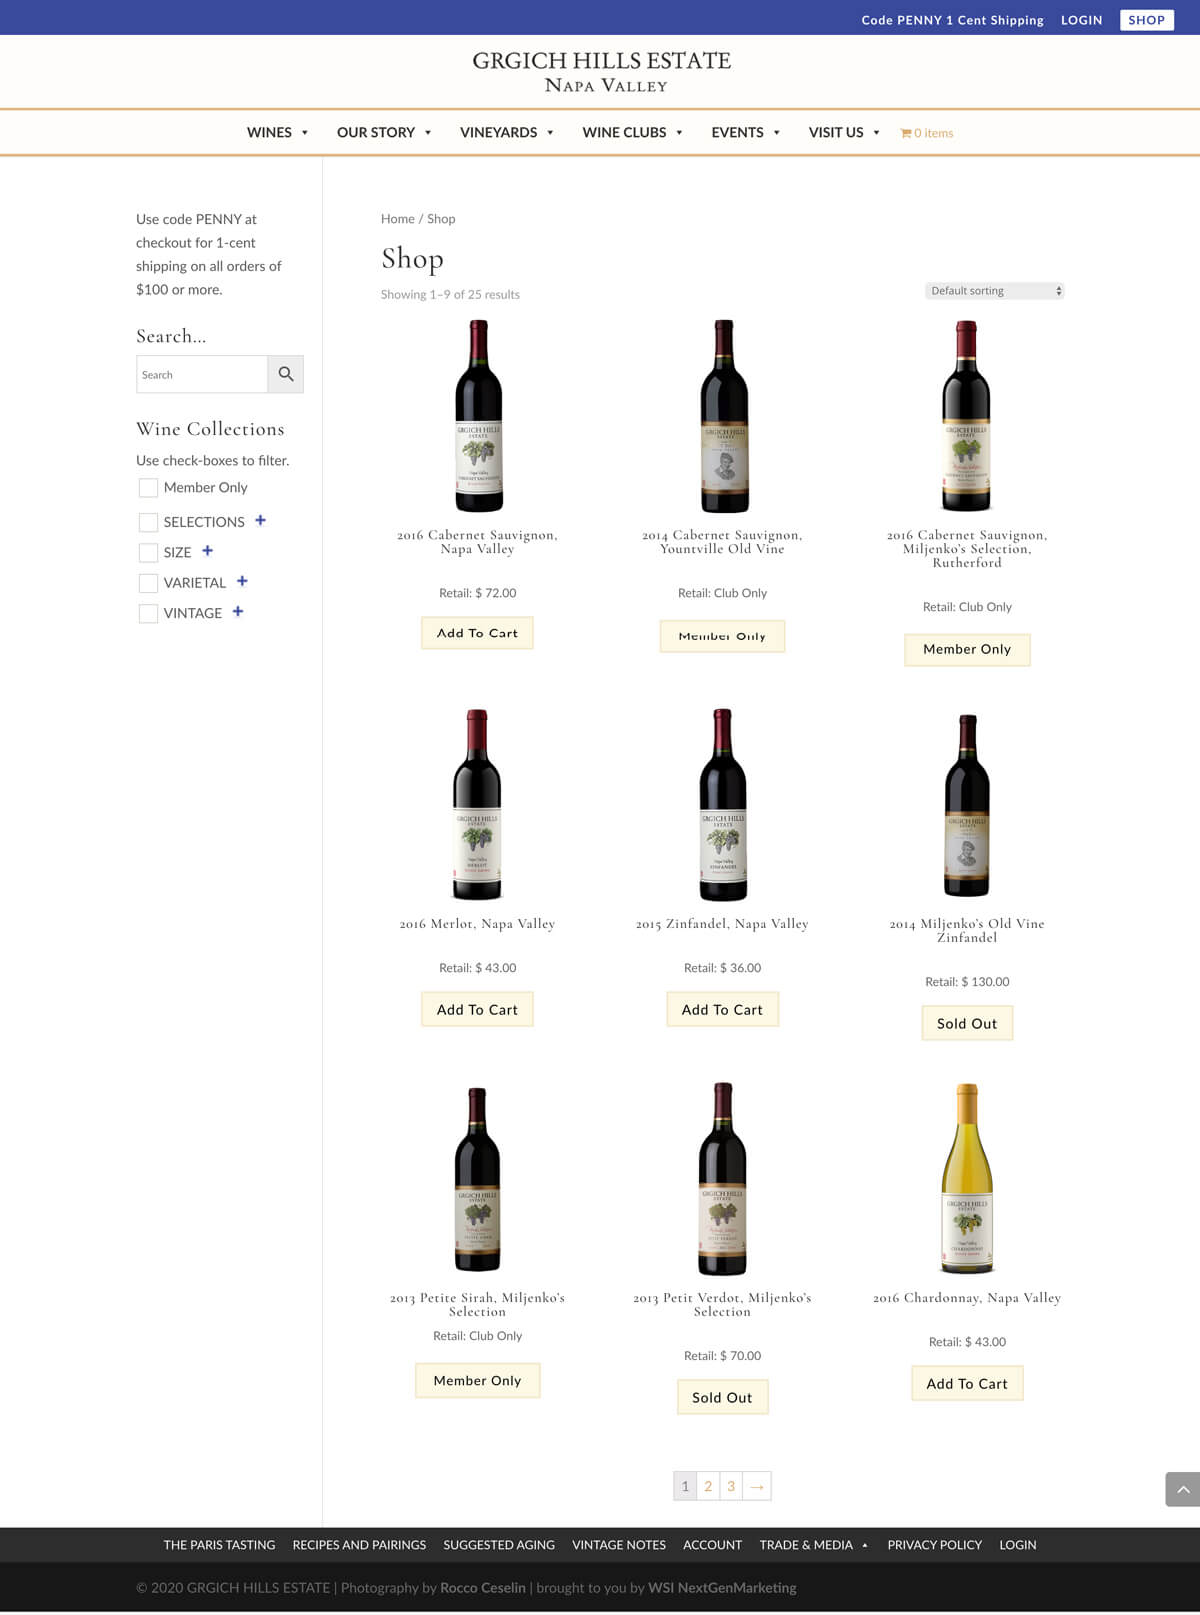 grgich-hills-shop-ecommerce-winery-website-design